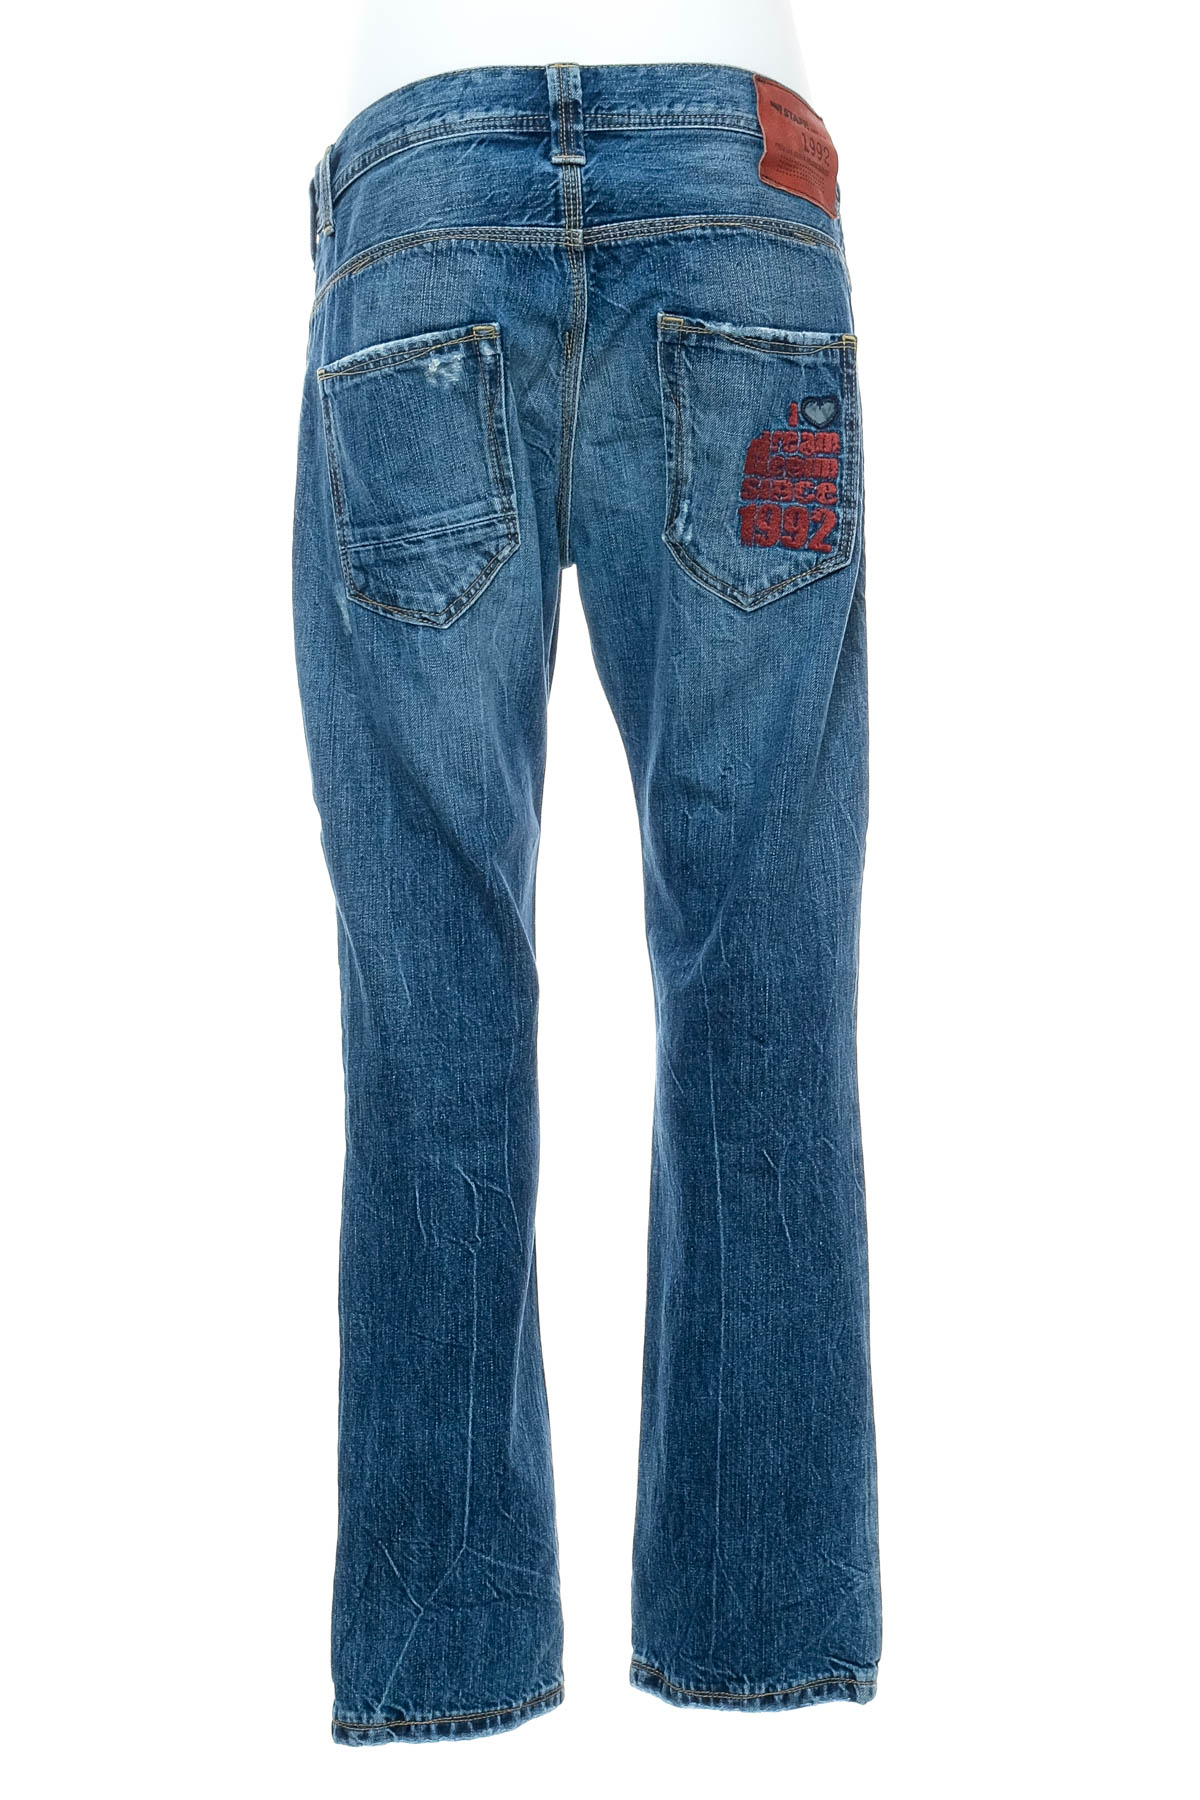 Men's jeans - Staff Jeans & Co. - 1